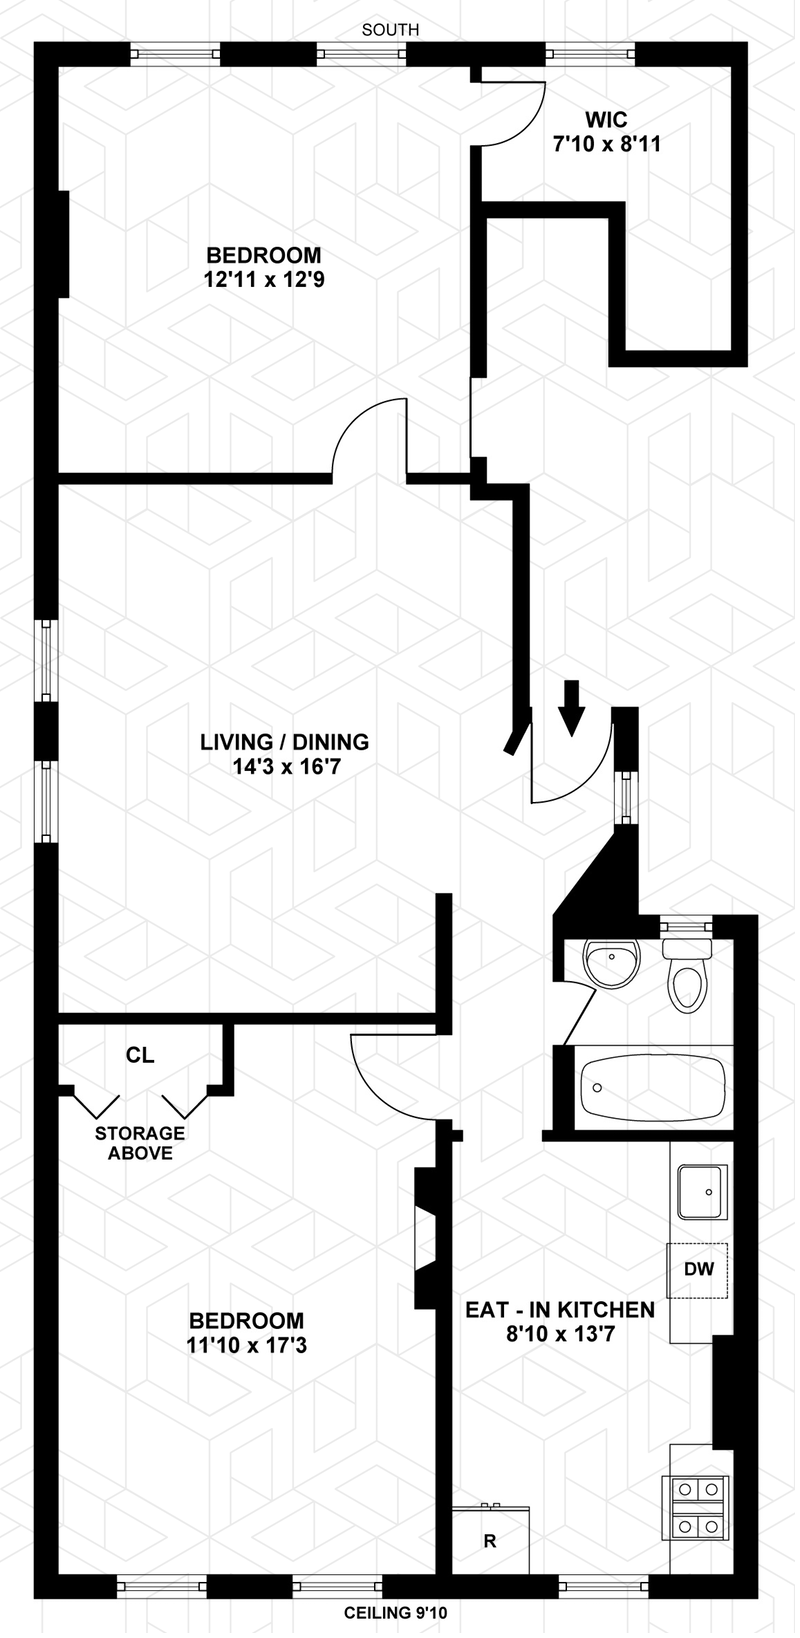 Floorplan for 104 Maple Street, 3